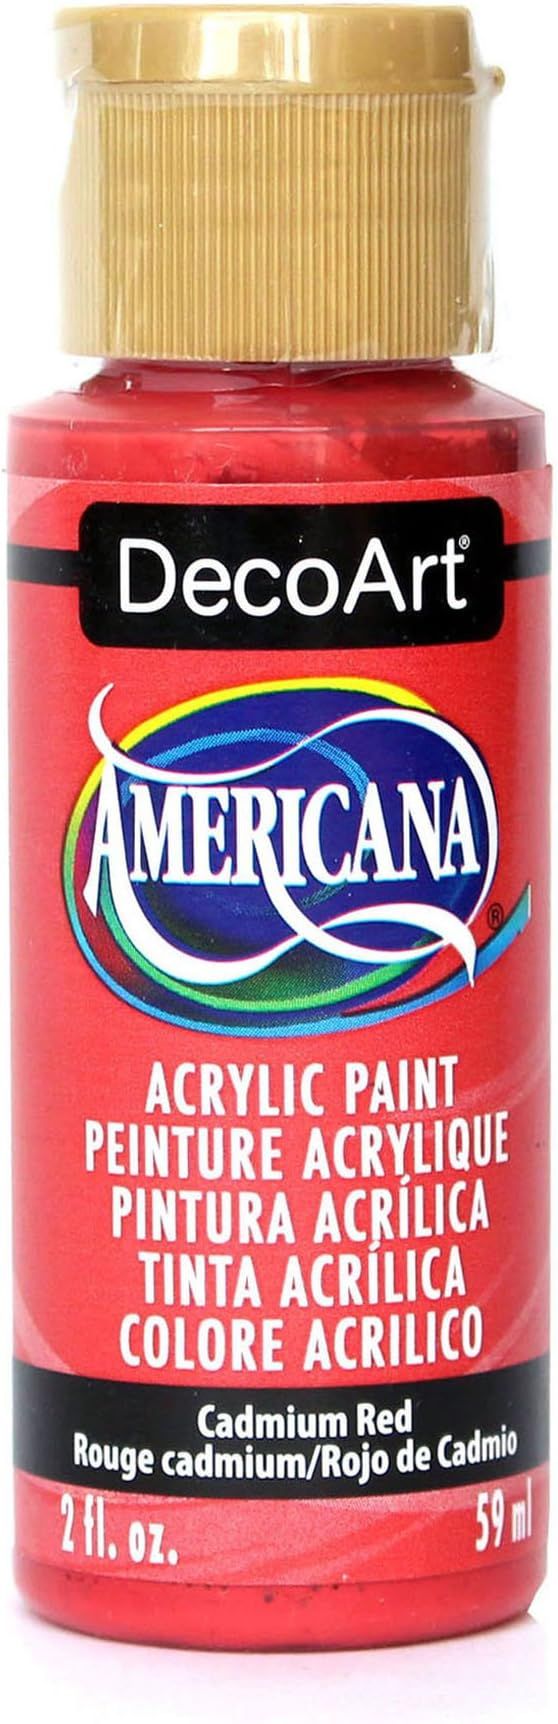 DecoArt Americana Acrylic Paint, 2-Ounce, Cadmium Red | Amazon (US)